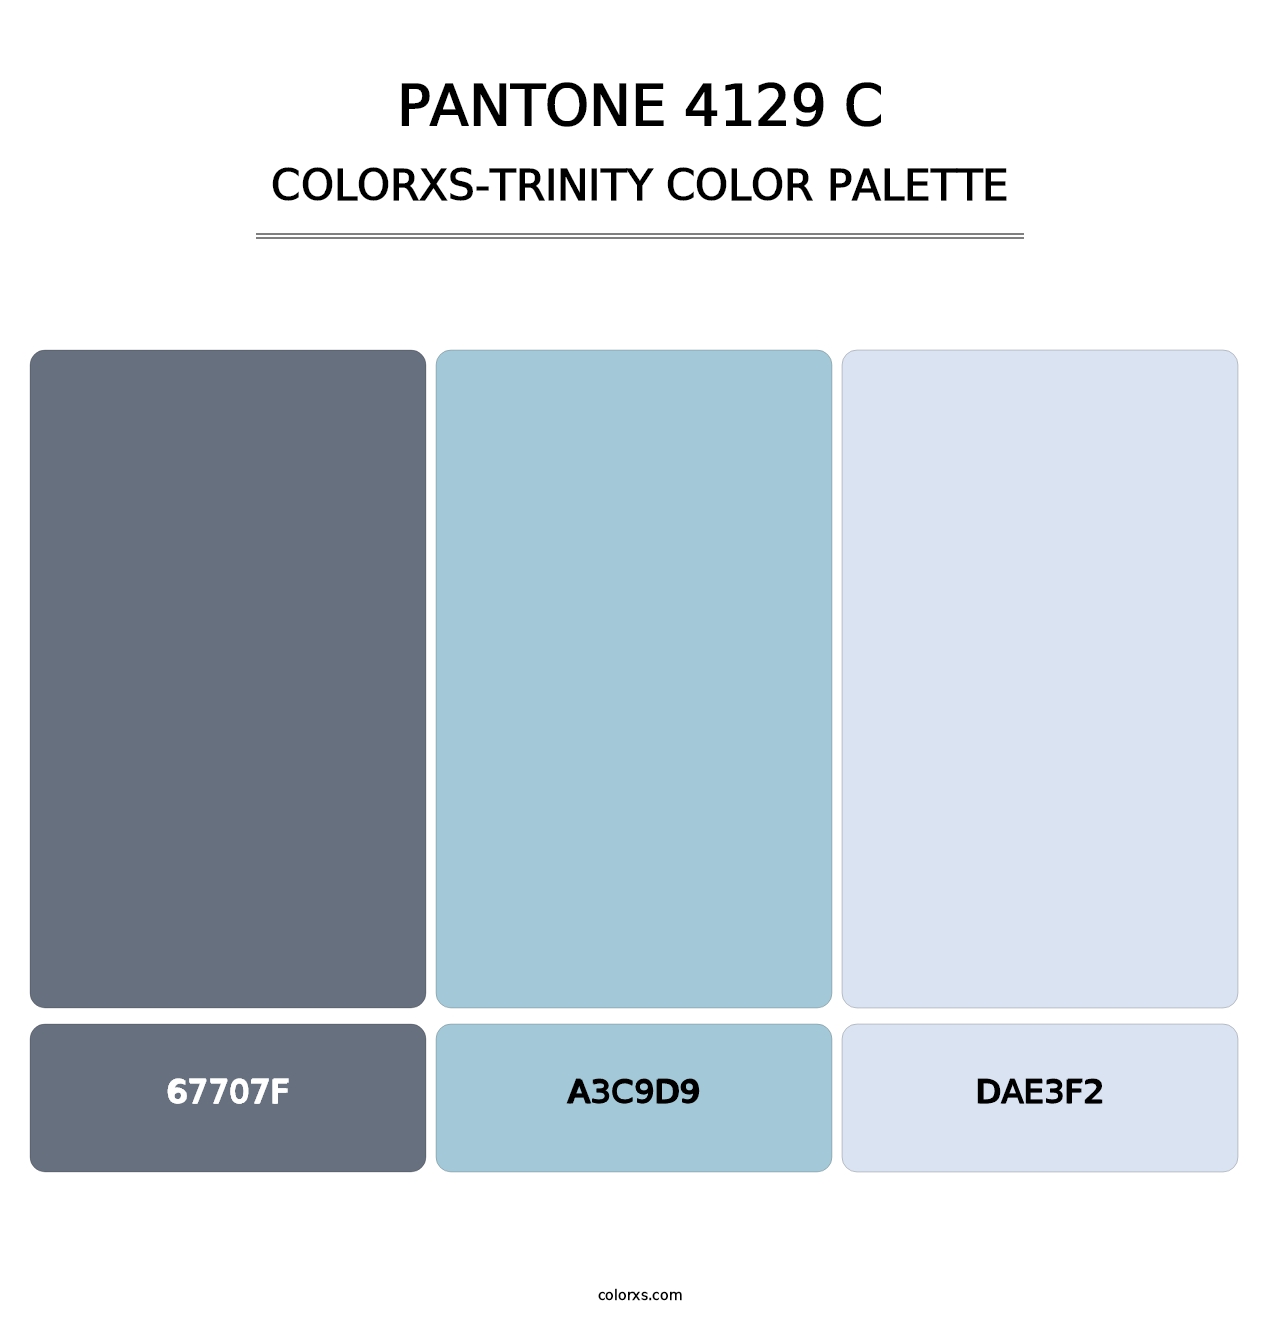 PANTONE 4129 C - Colorxs Trinity Palette